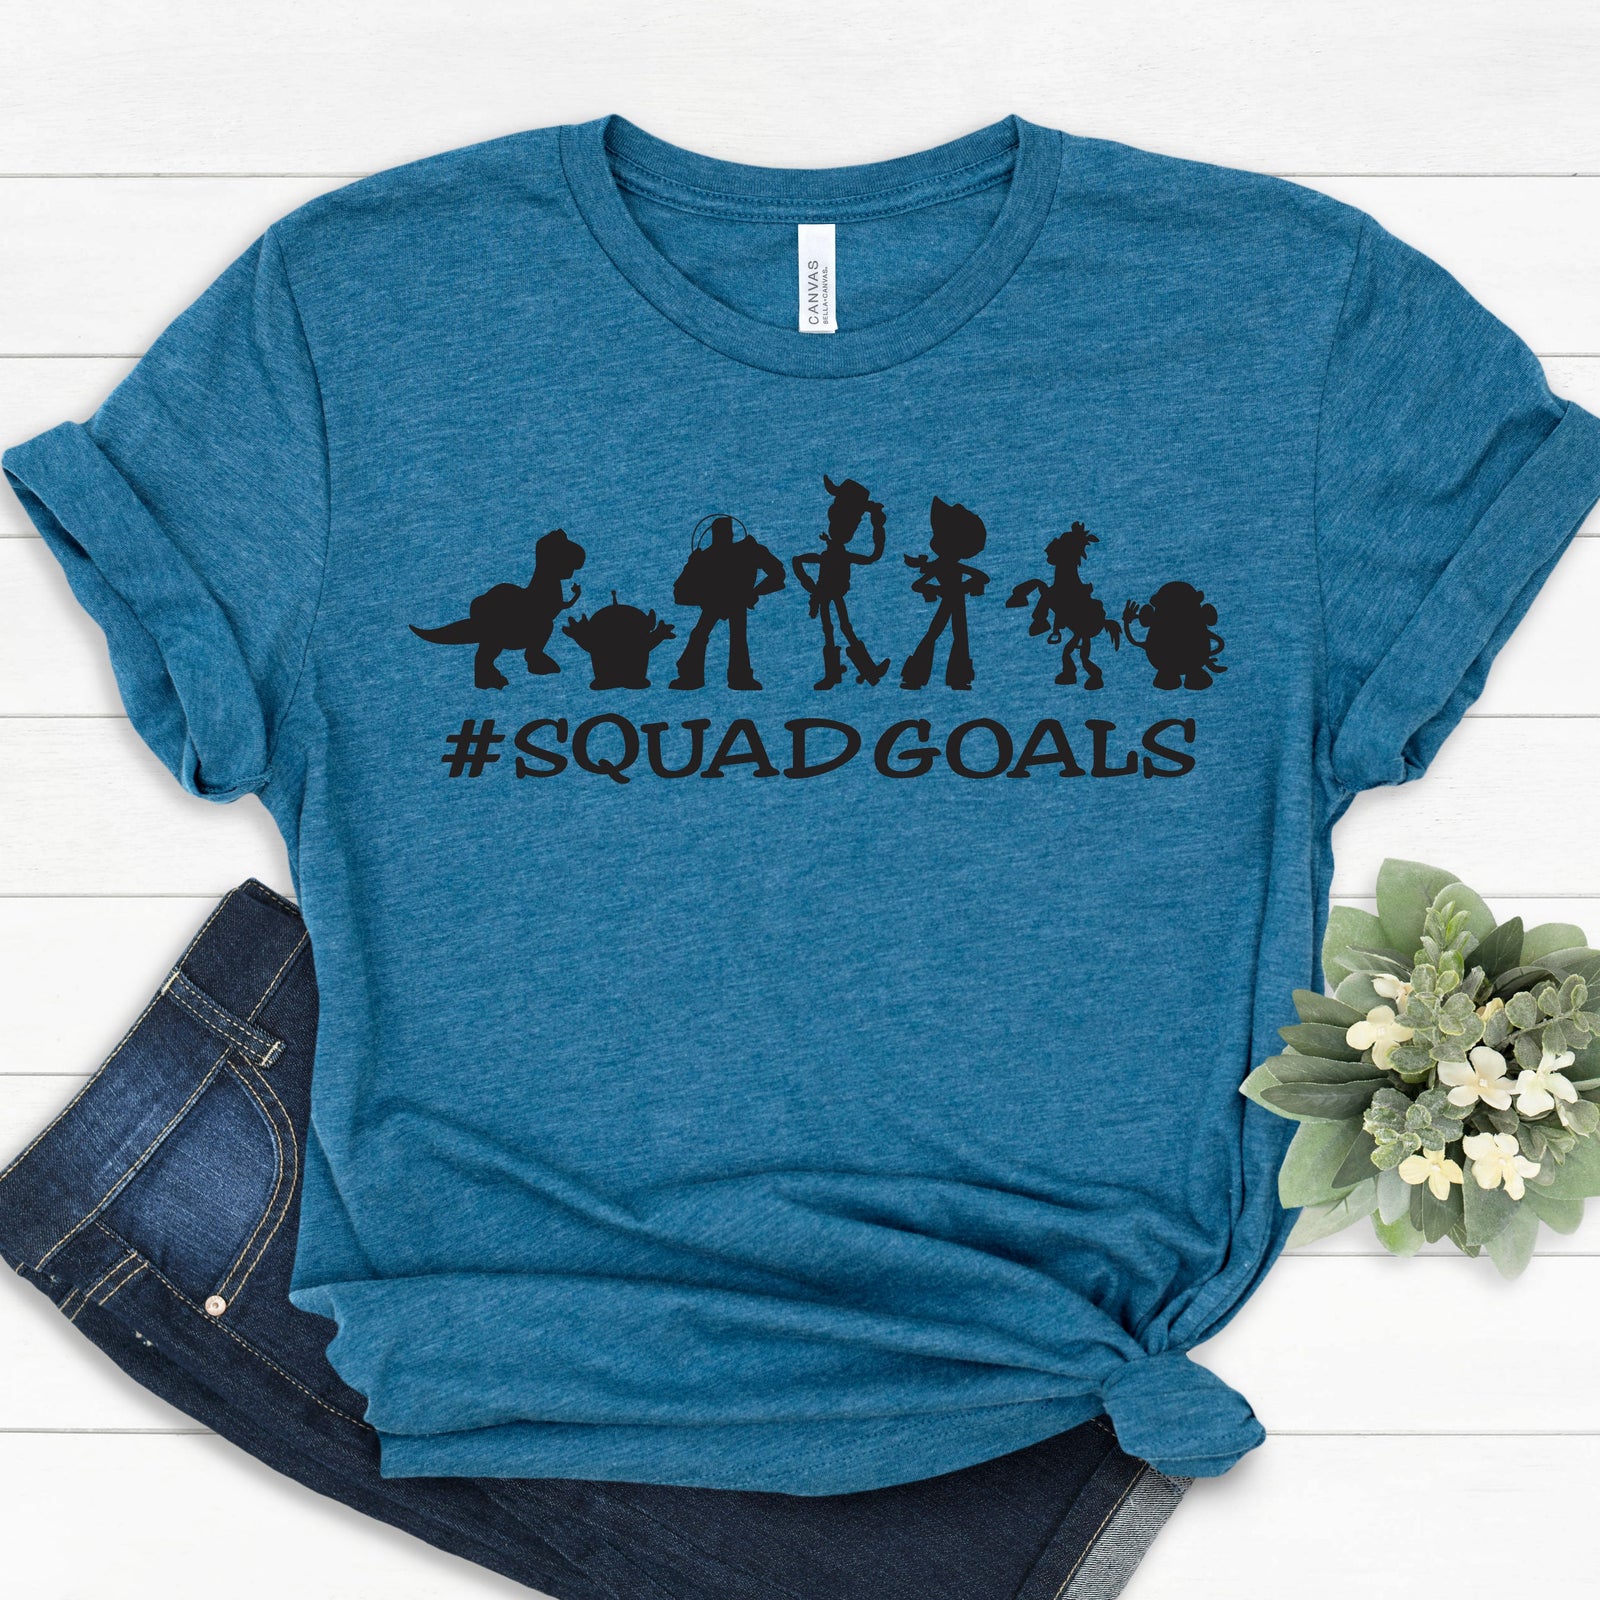 Toy Story Squad Goals Adult Unisex T Shirt - Family Matching Shirts